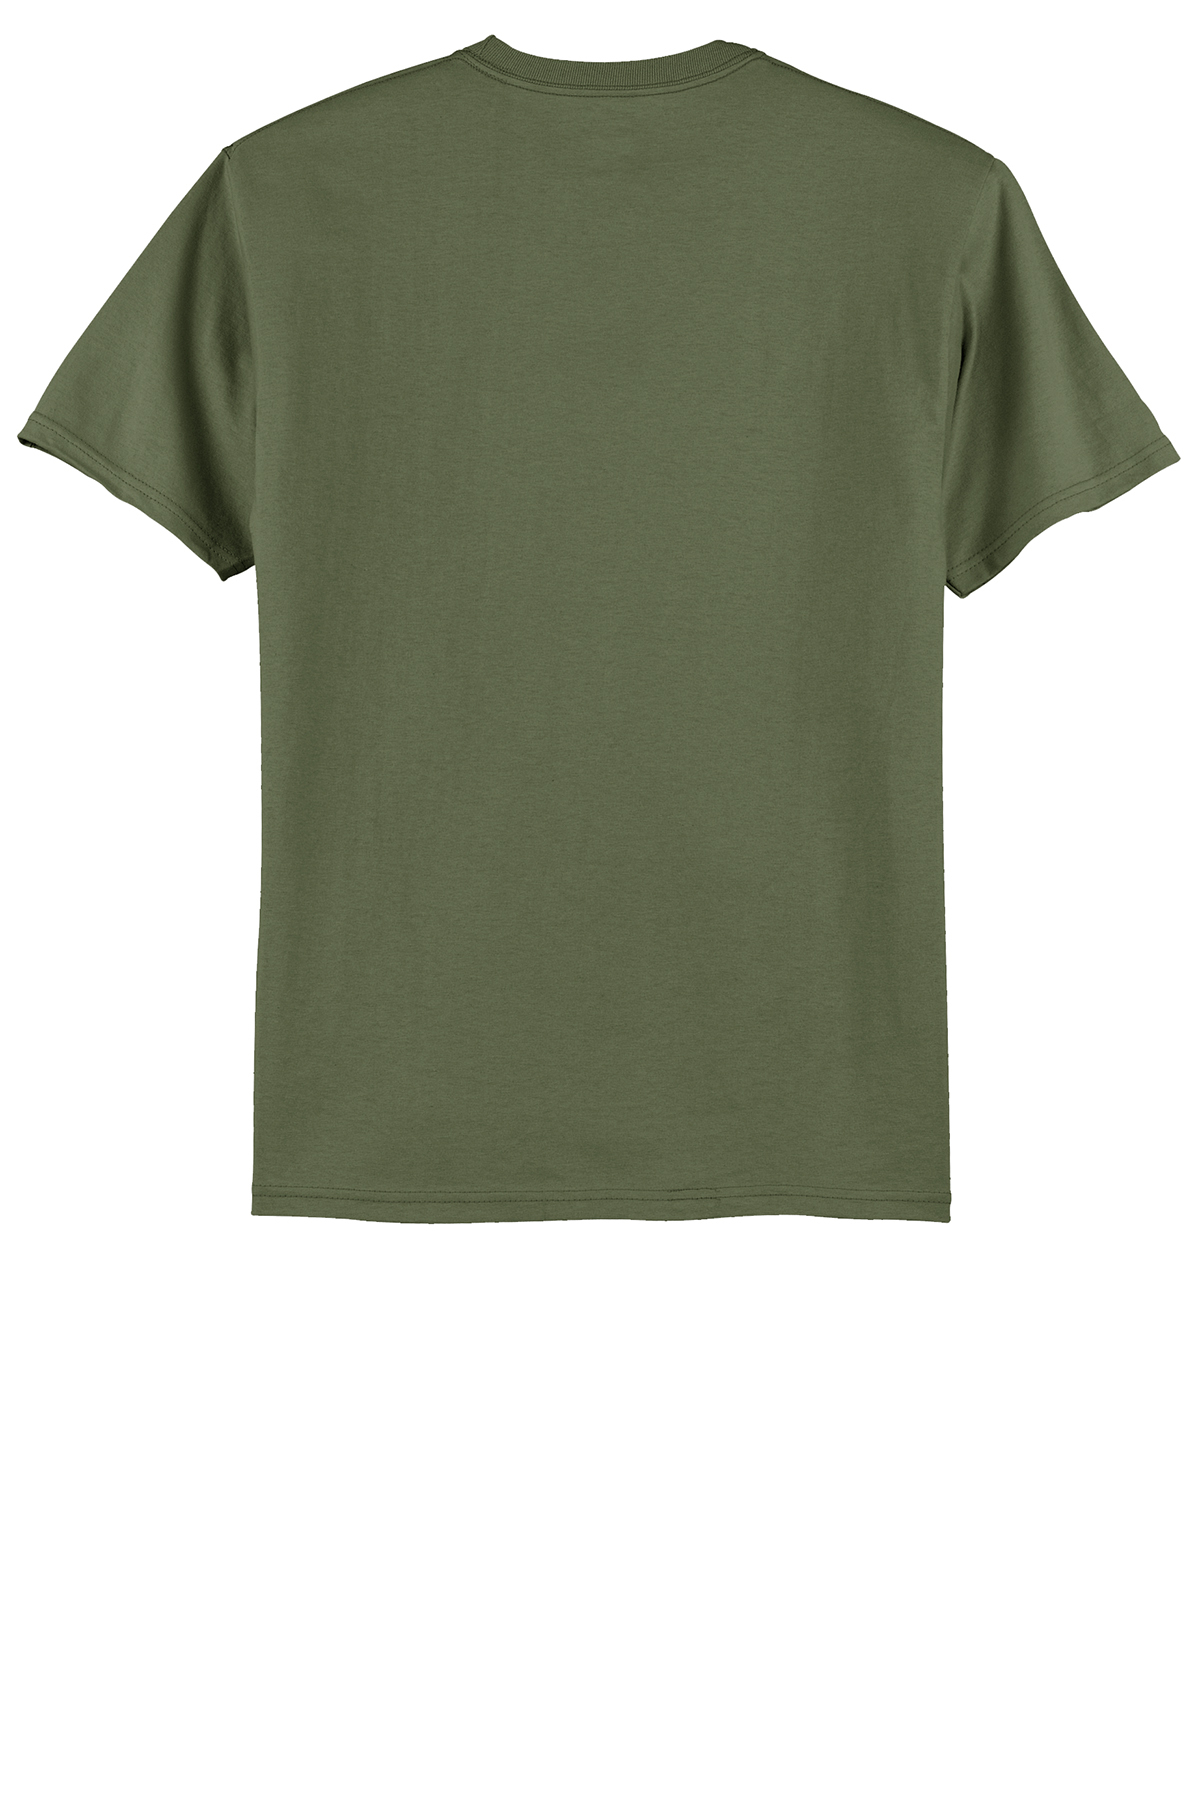 Hanes - Authentic 100% Cotton T-Shirt, Product